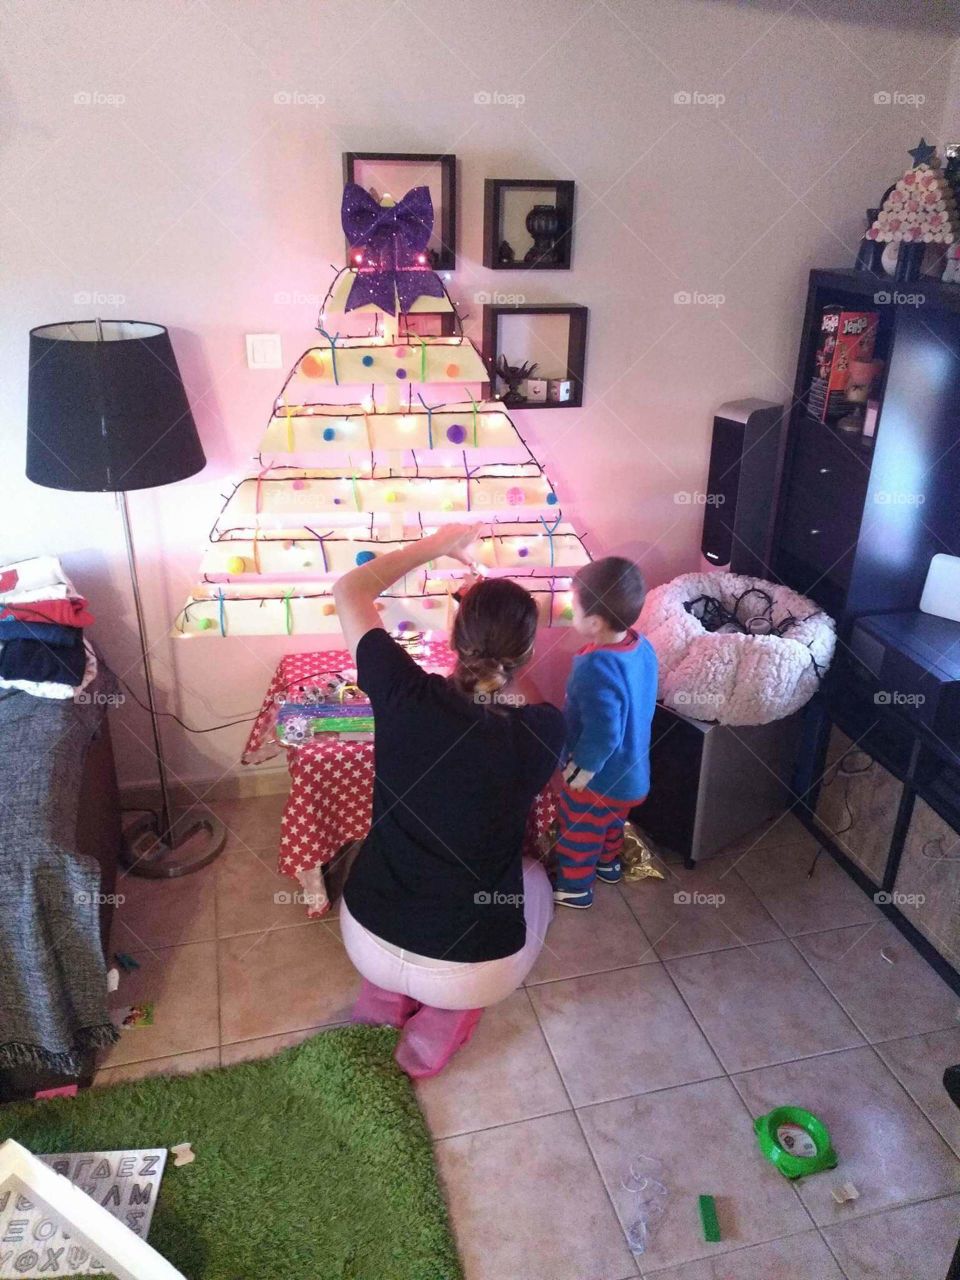 Family Christmas tree